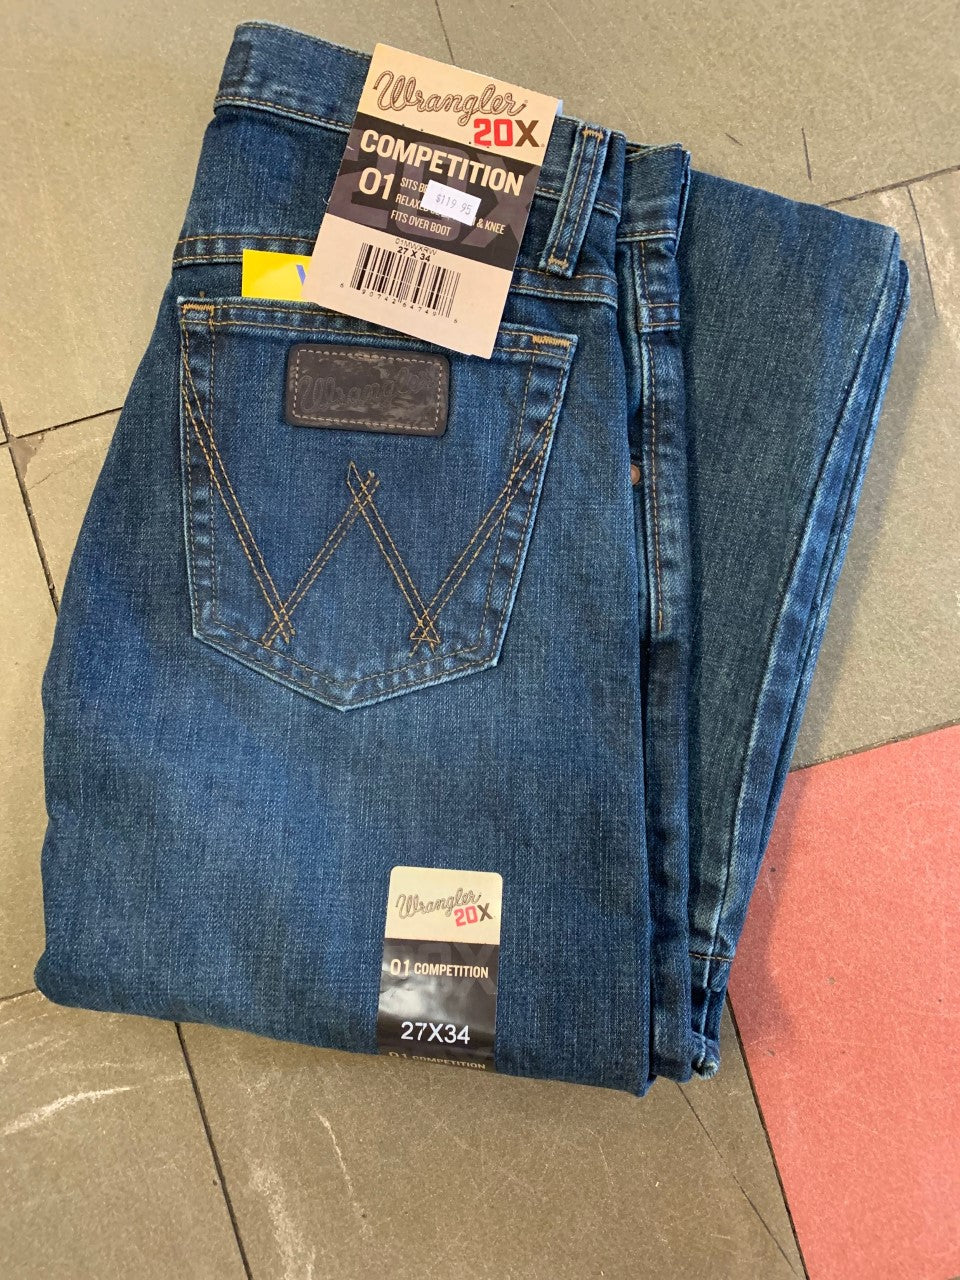 Boy's Wrangler Retro® Slim Straight Jean (8-20)